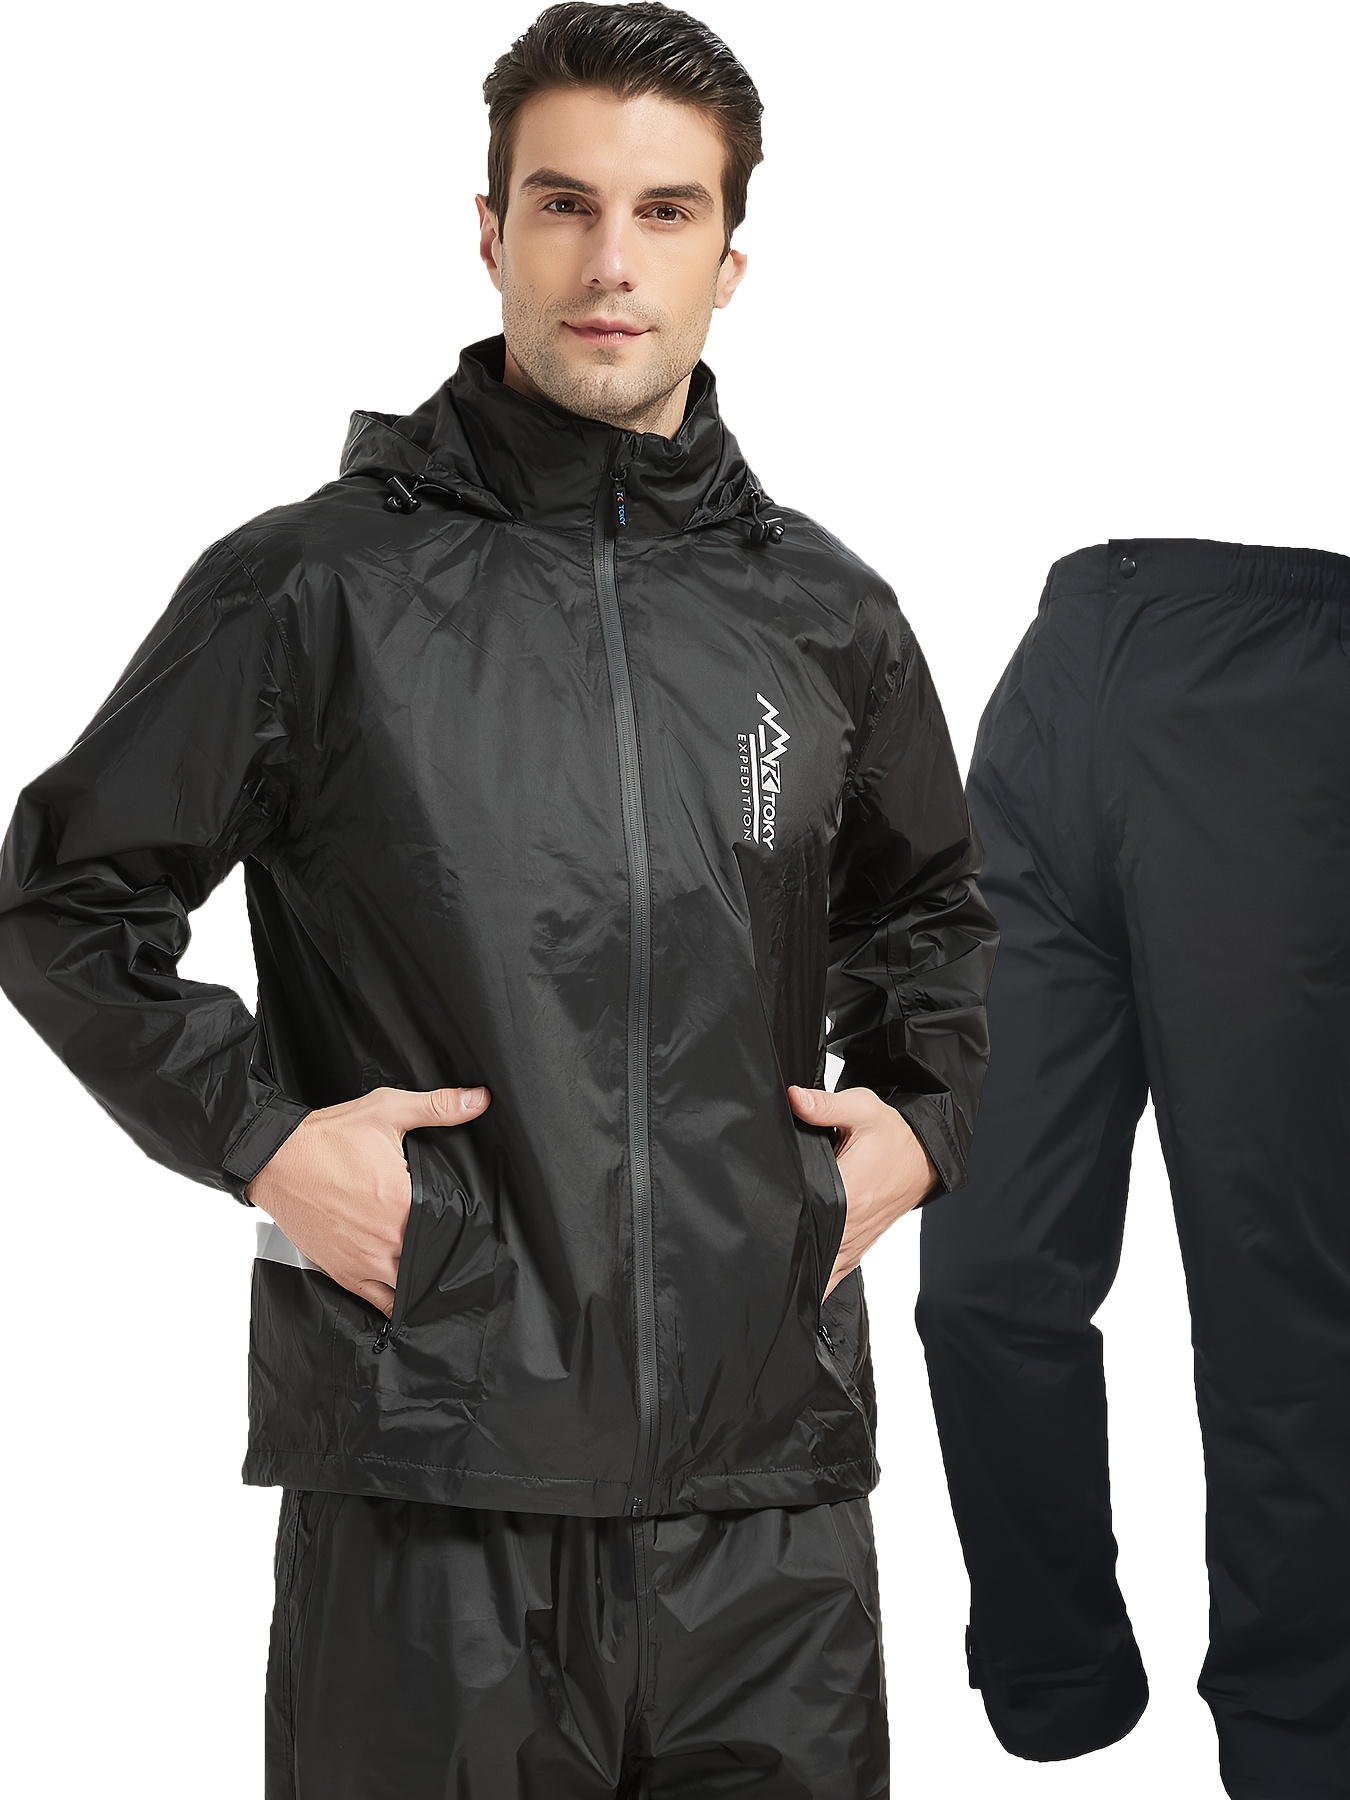 Impermeable con capucha para mujer, Chubasquero con capucha de talla extra  grande, chaqueta de lluvia resistente al viento, casual al aire libre